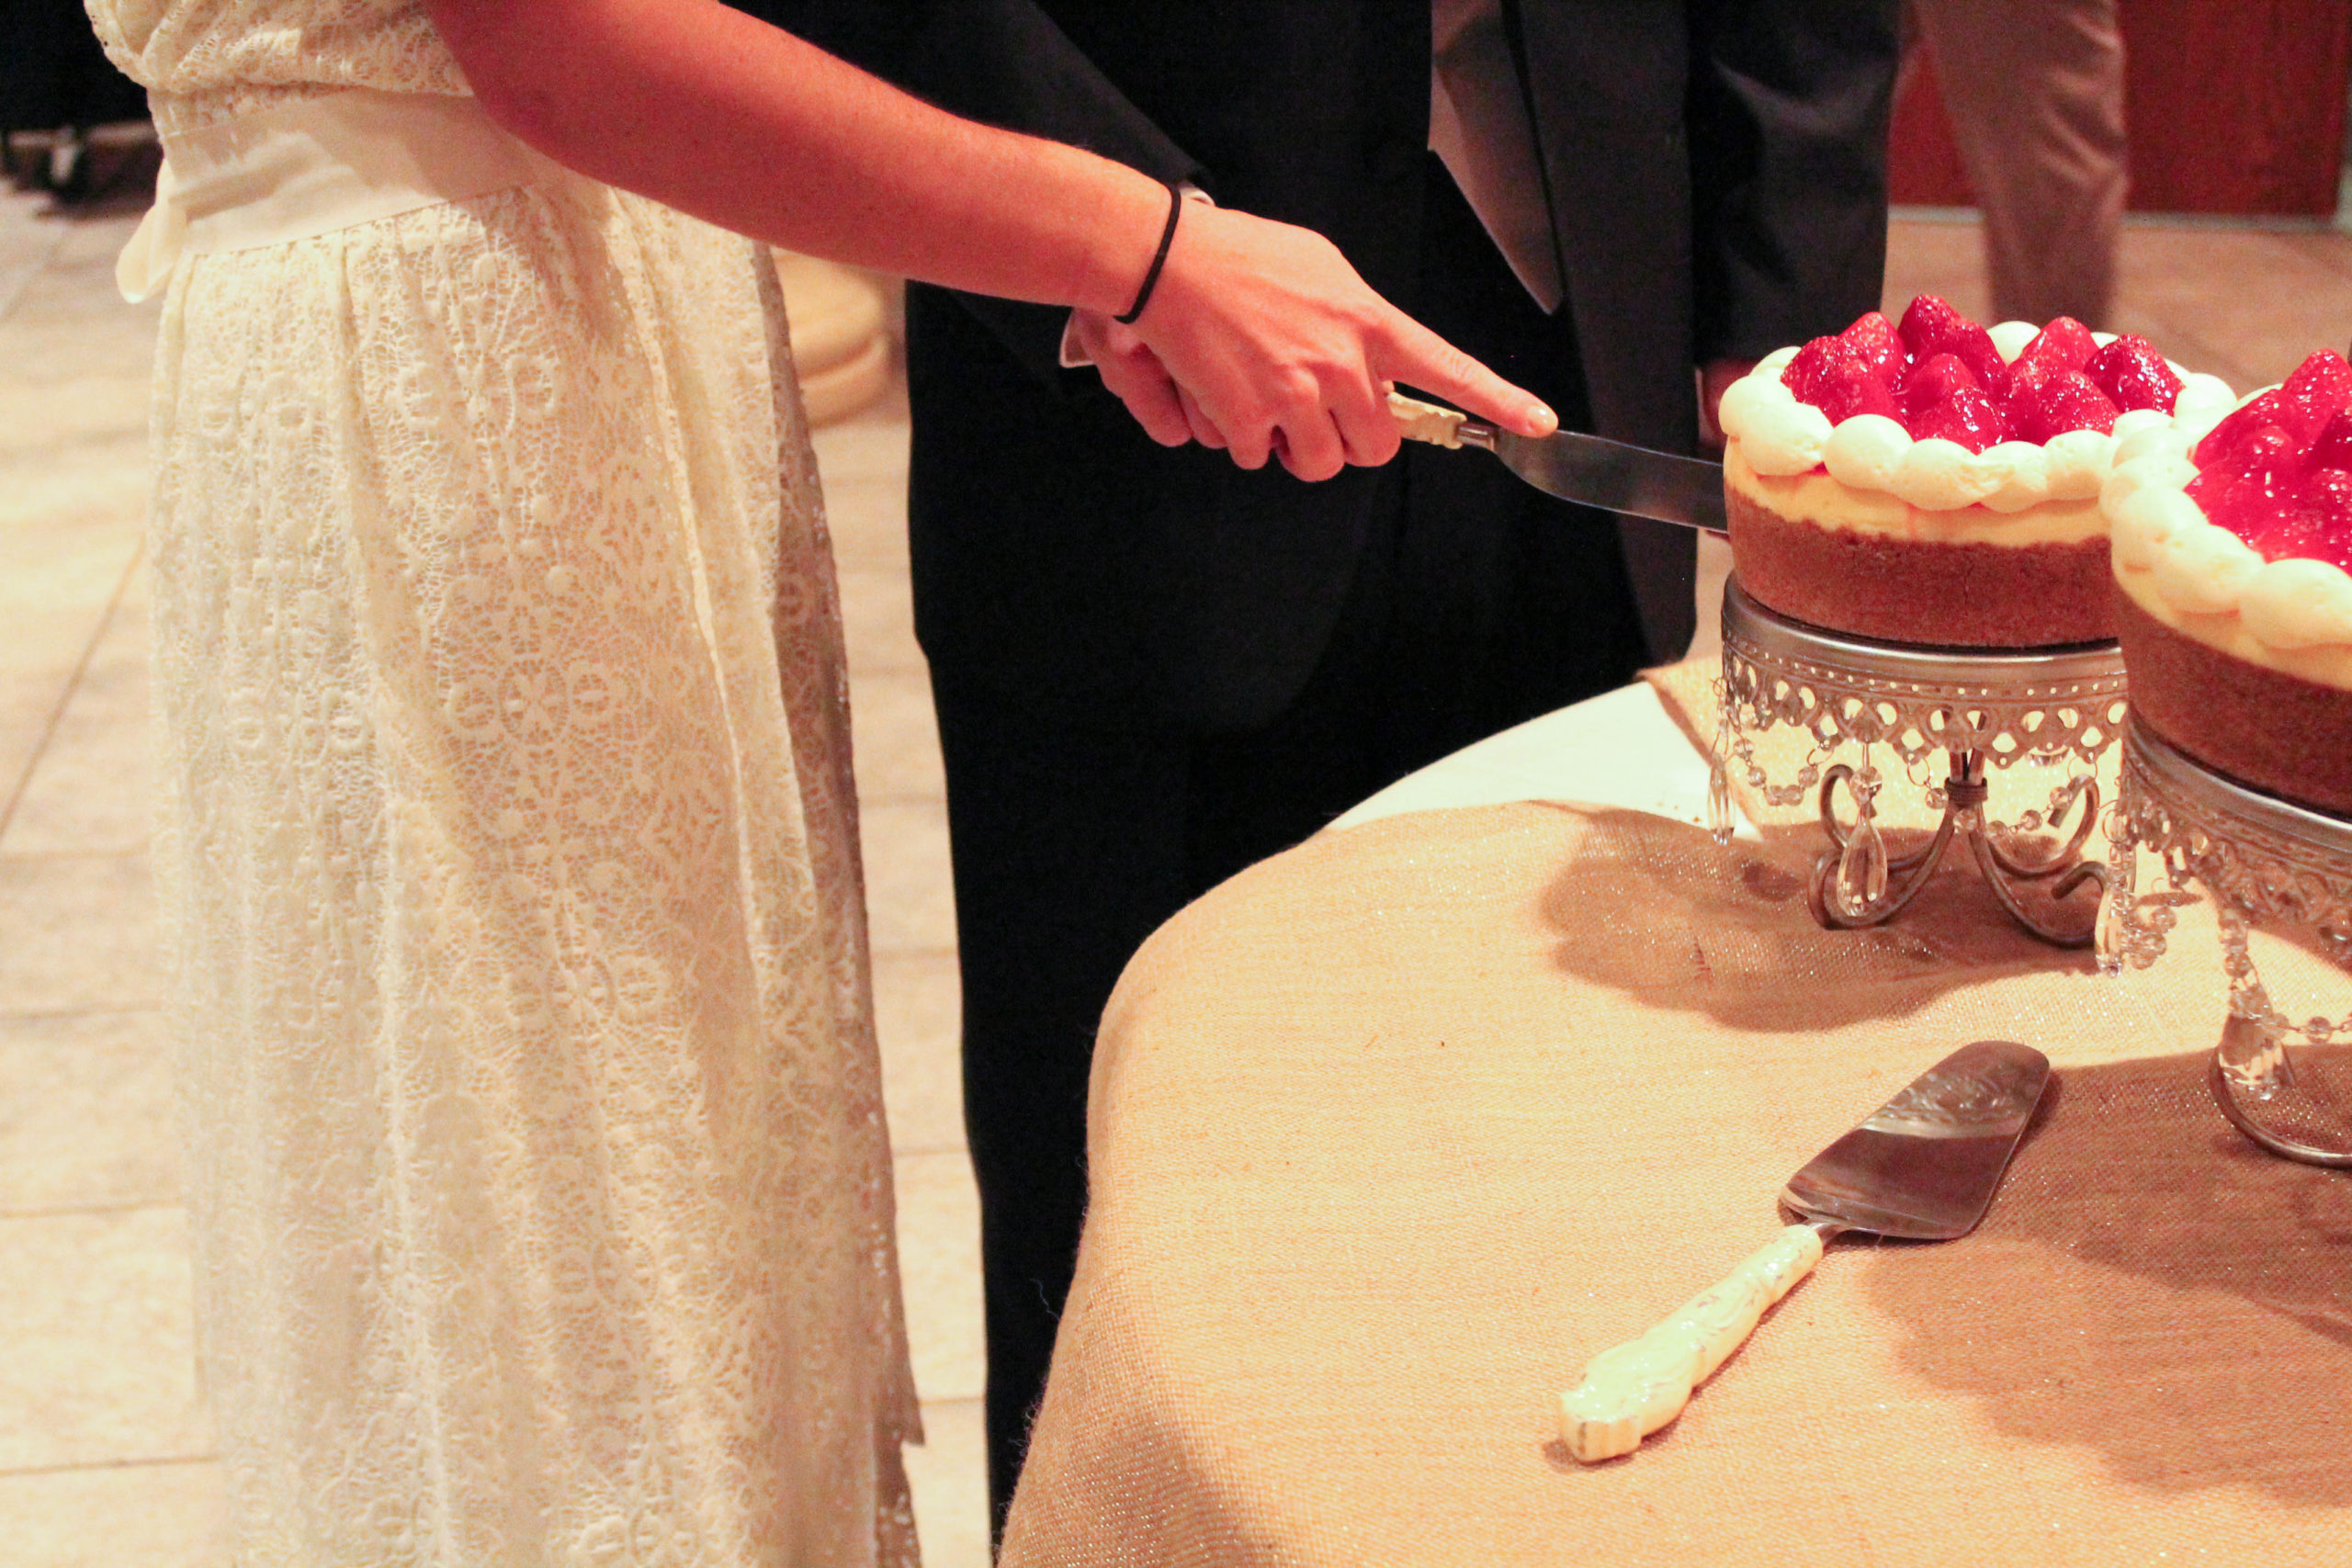 Tori & Austin's Waite Winter Wedding Cake Cutting Photos | Captured By Lexi In Utah